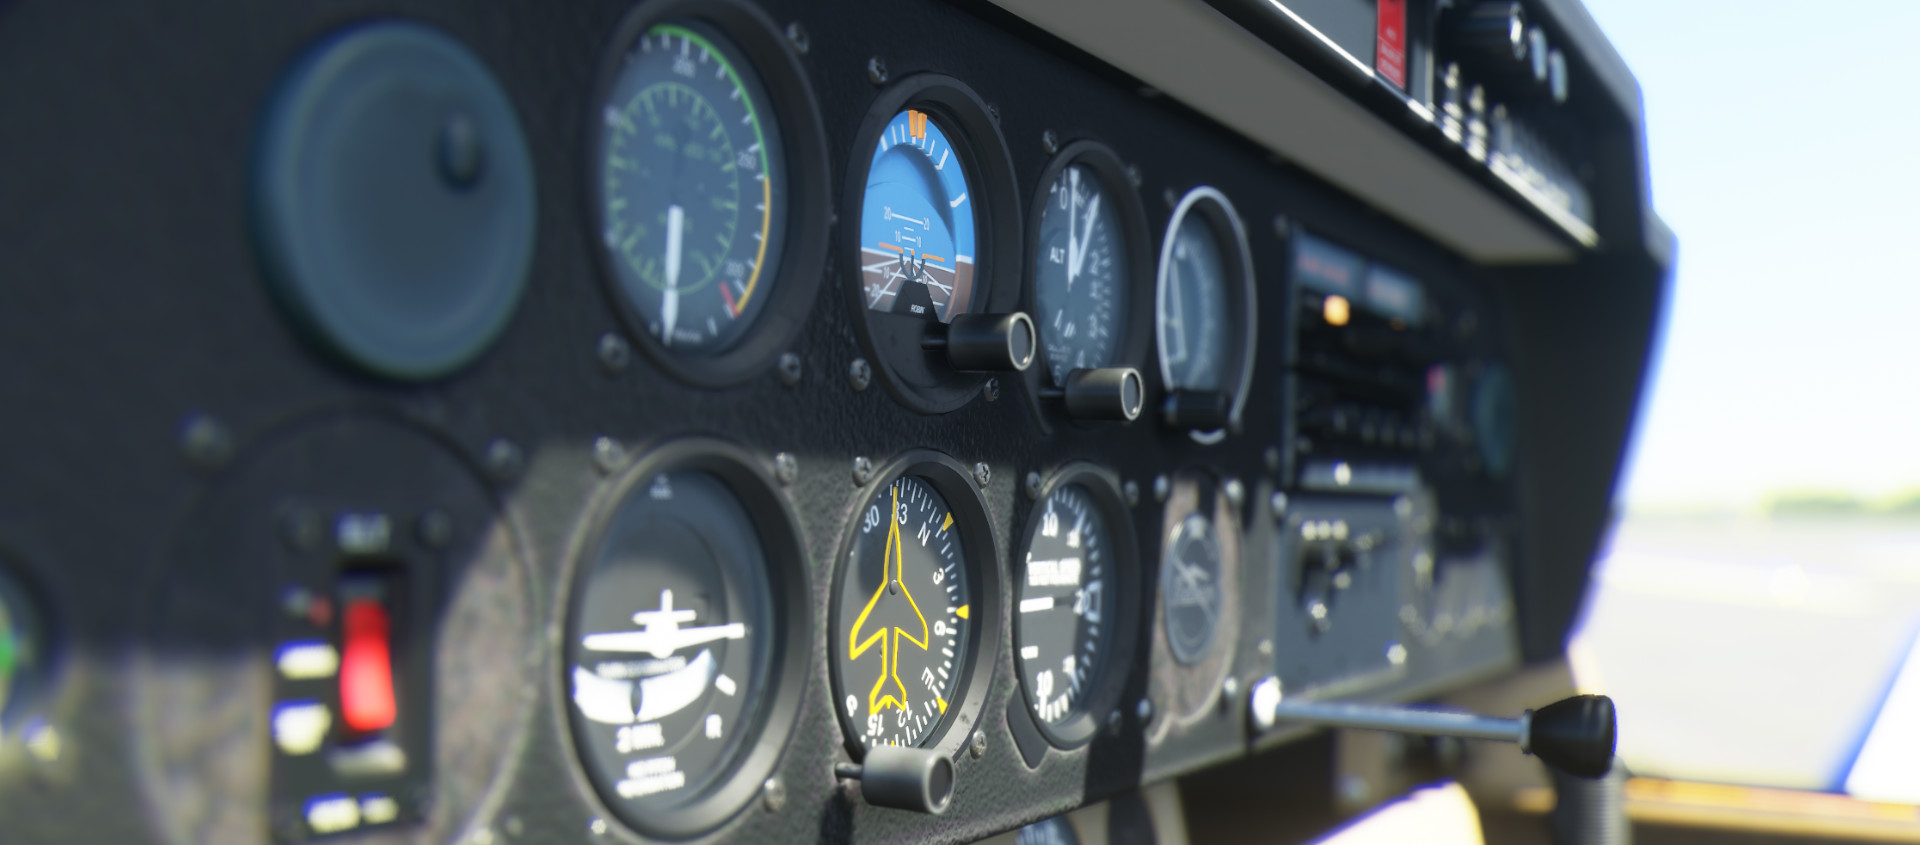 Microsoft Flight Simulator 2020: Inhaltsleere Ankündigungen